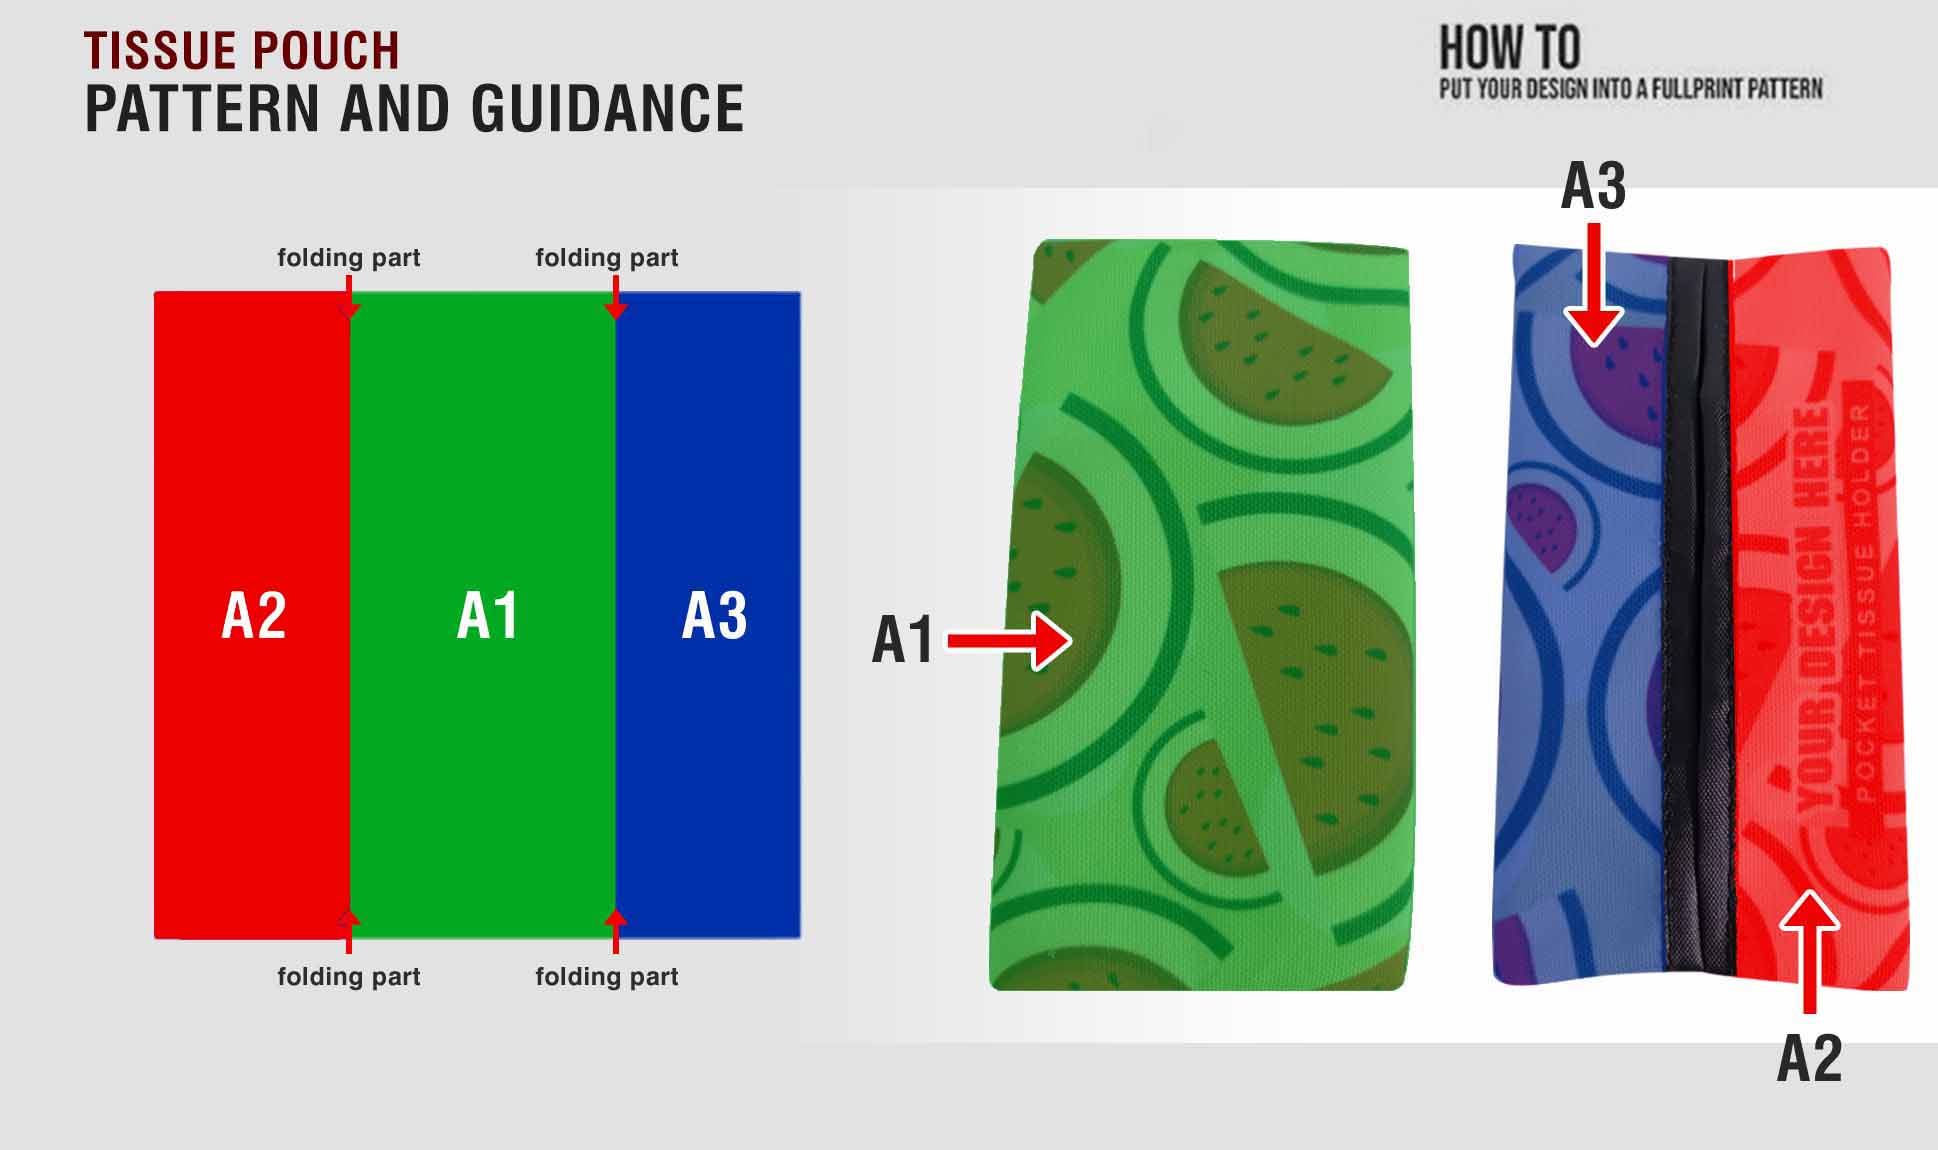 guidance pattern 1